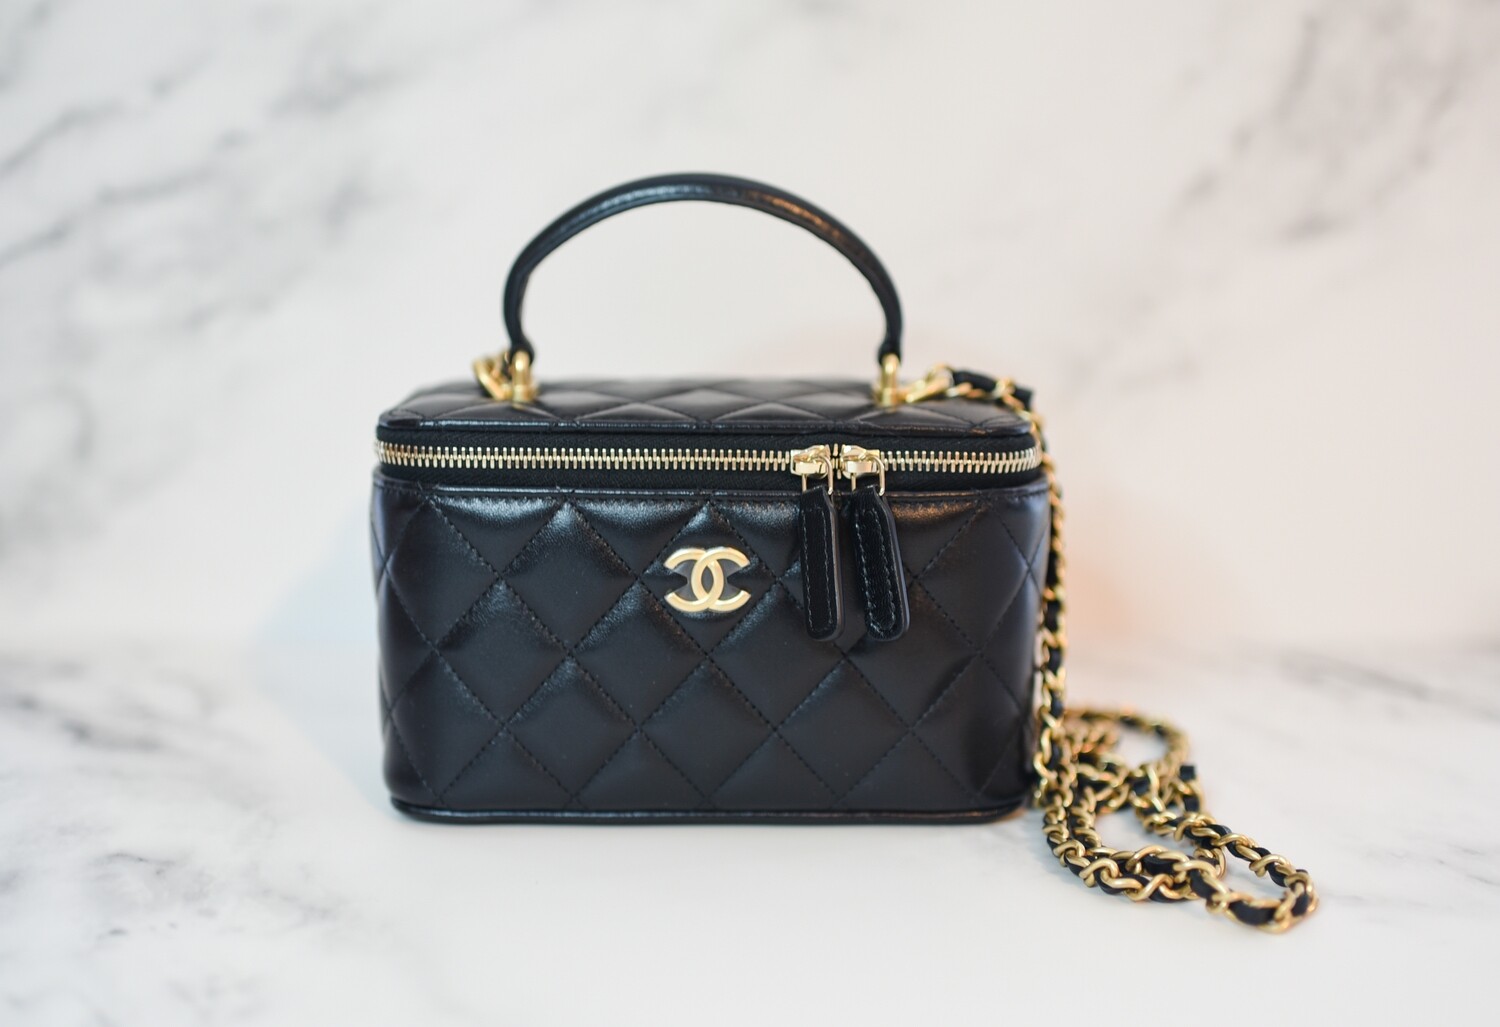 Chanel Top Handle Vanity with Chain, Black, New in Box WA001